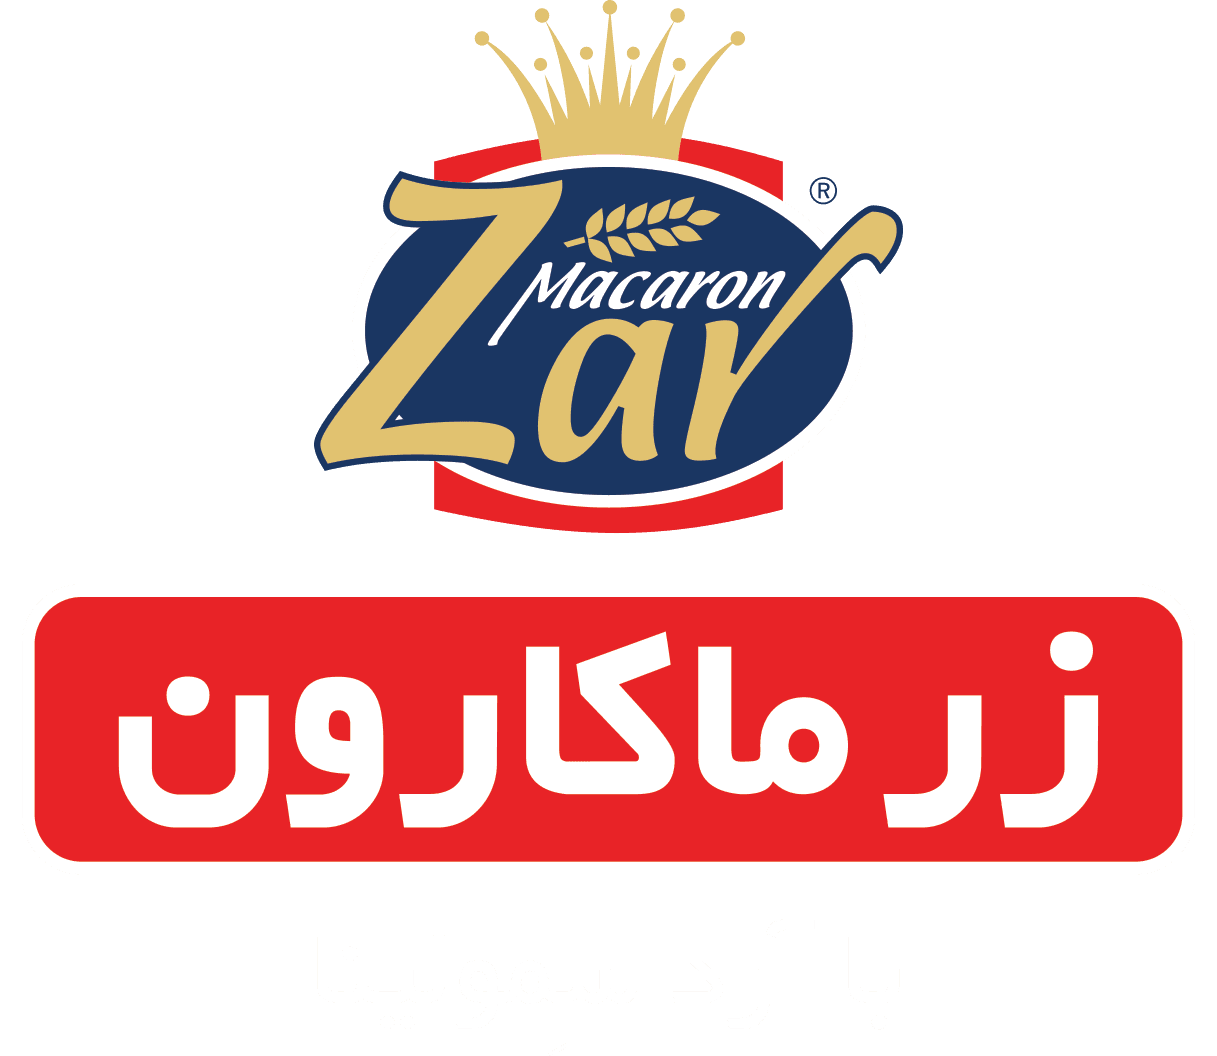 About Zar macaron